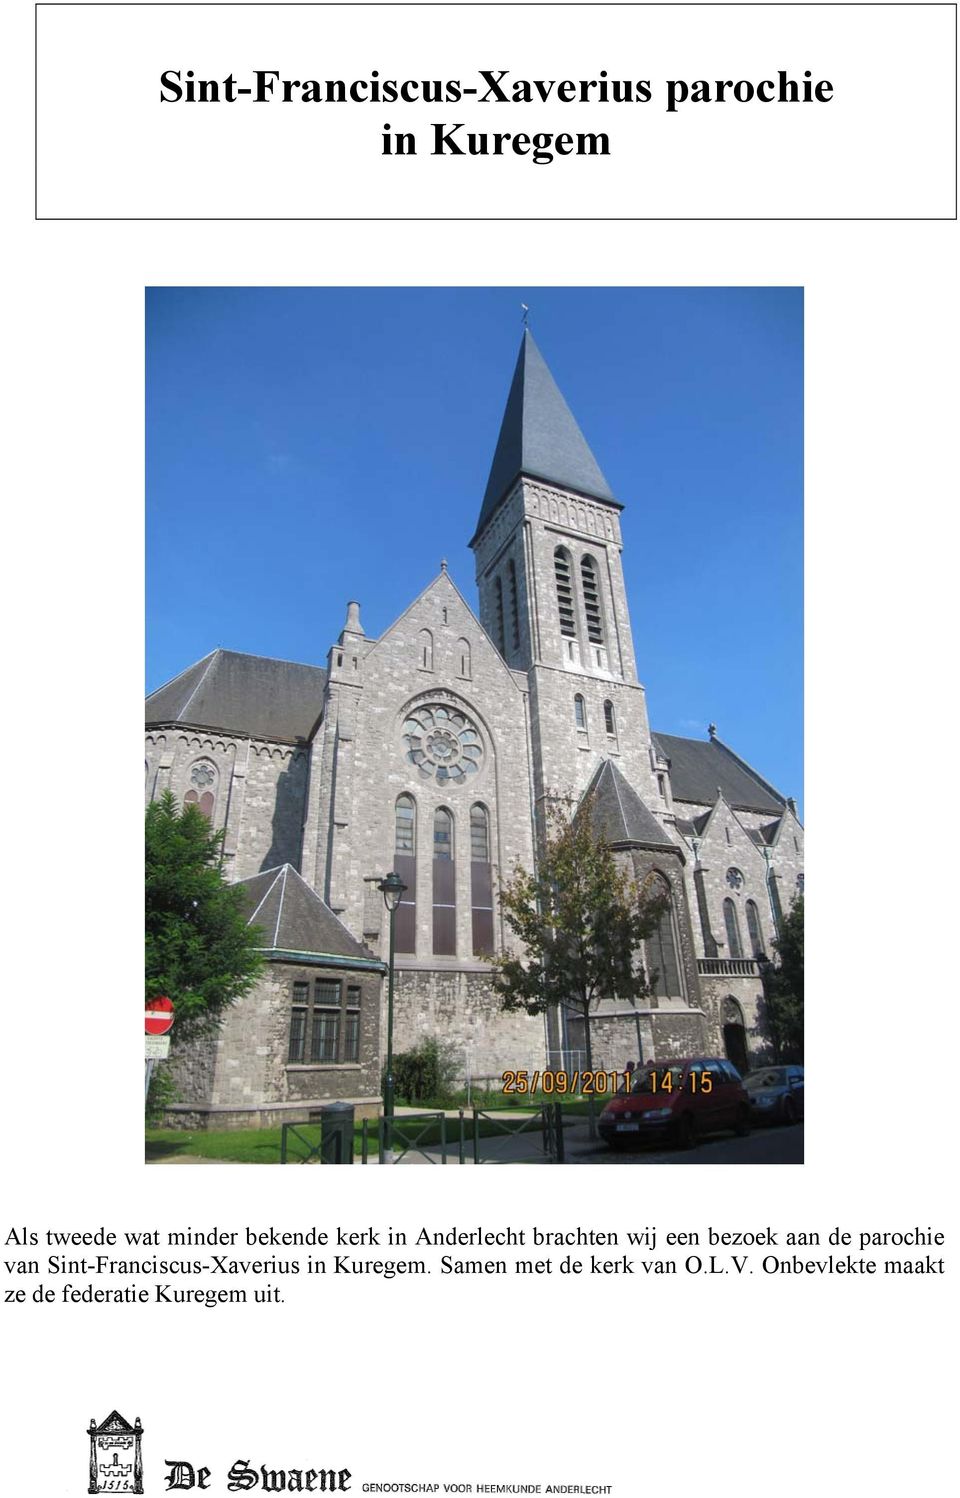 de parochie van Sint-Franciscus-Xaverius in Kuregem.